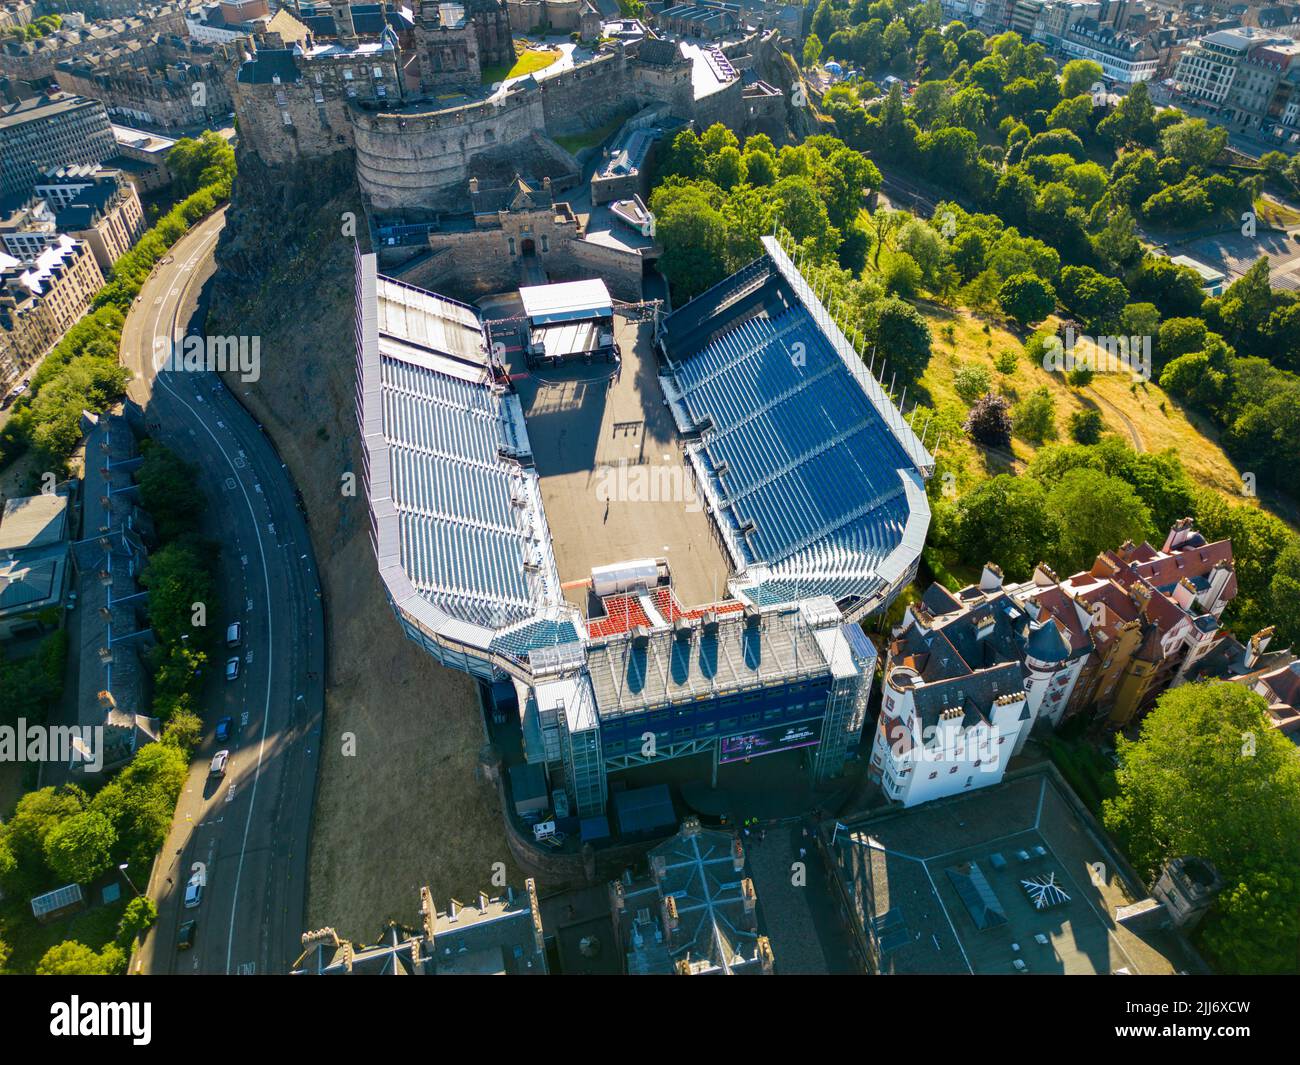 Concert stage at Edinburgh Castle Scotland UK Stock Photo